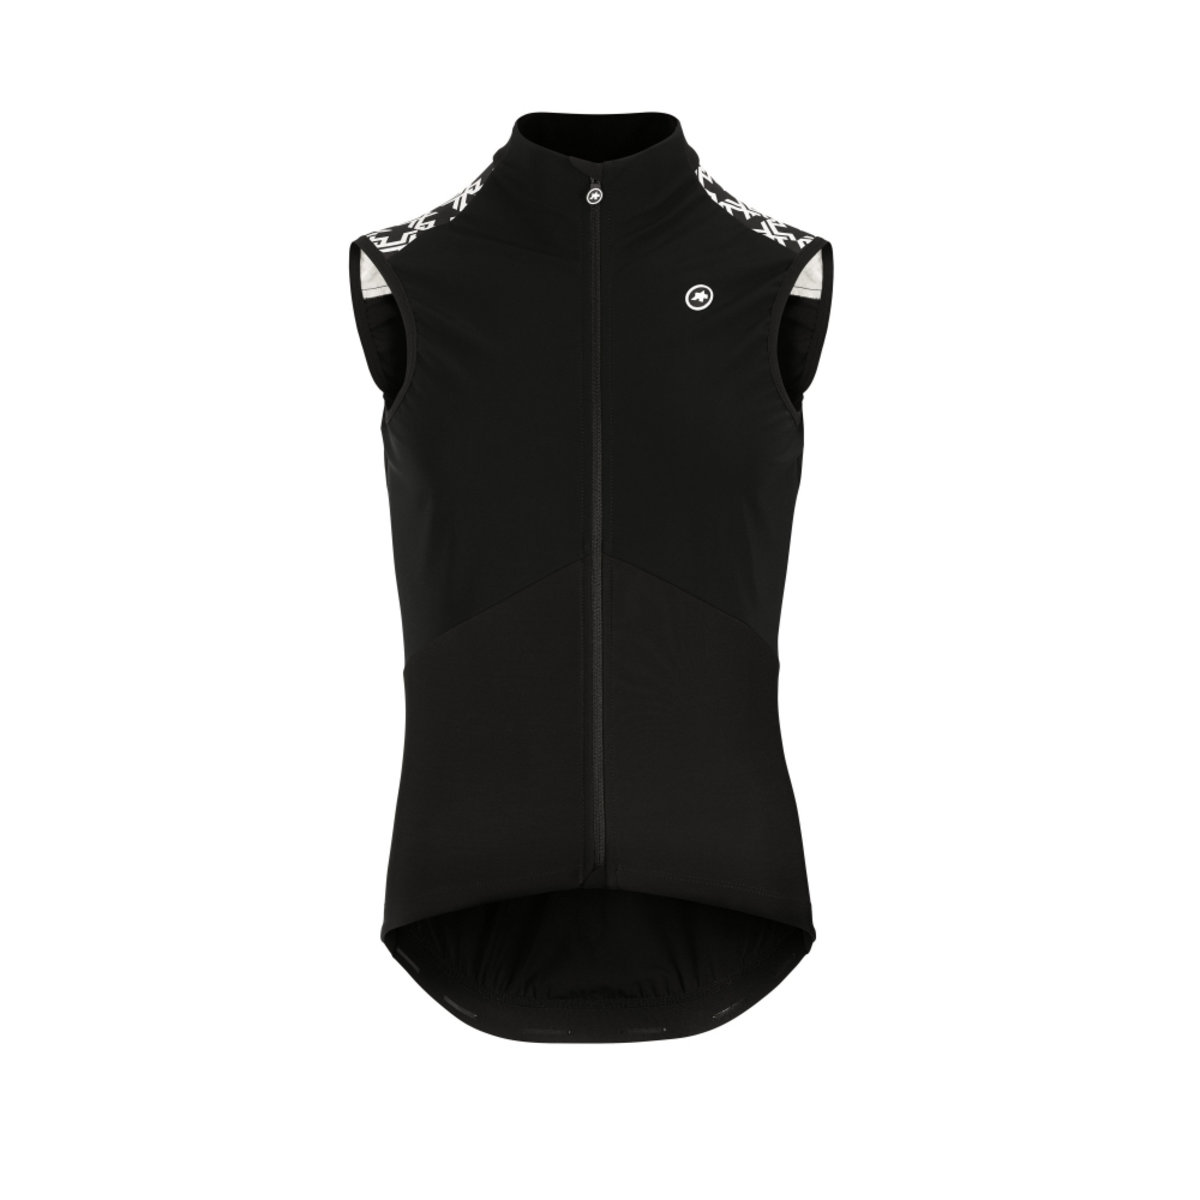 Жилетка ASSOS Mille GT Spring Fall Airblock Vest Black Series, мужская, черная с белым, TIR